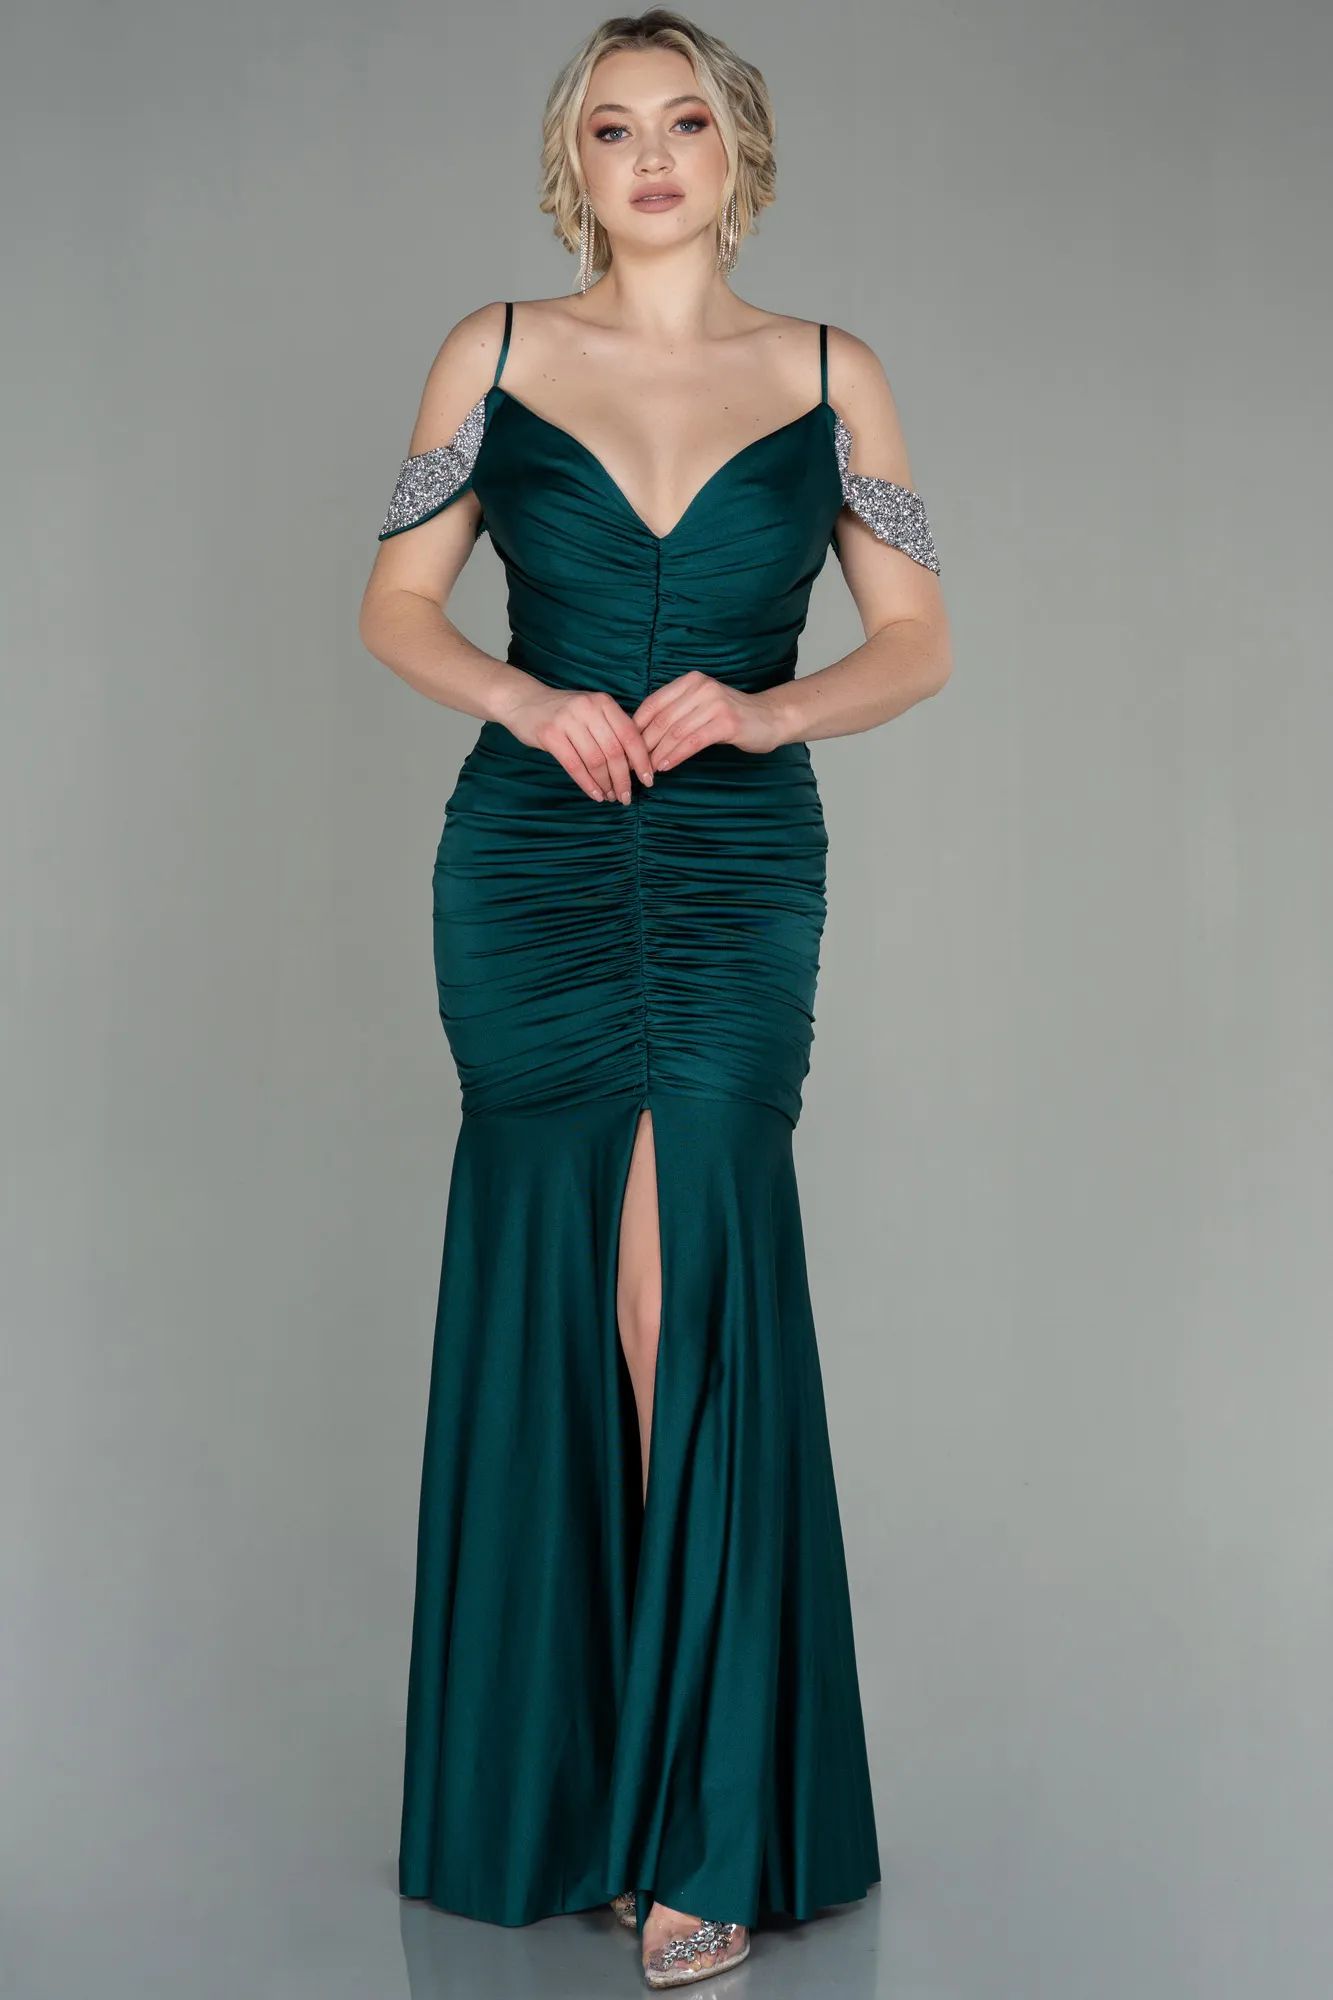 Emerald Green-Long Mermaid Evening Dress ABU2899